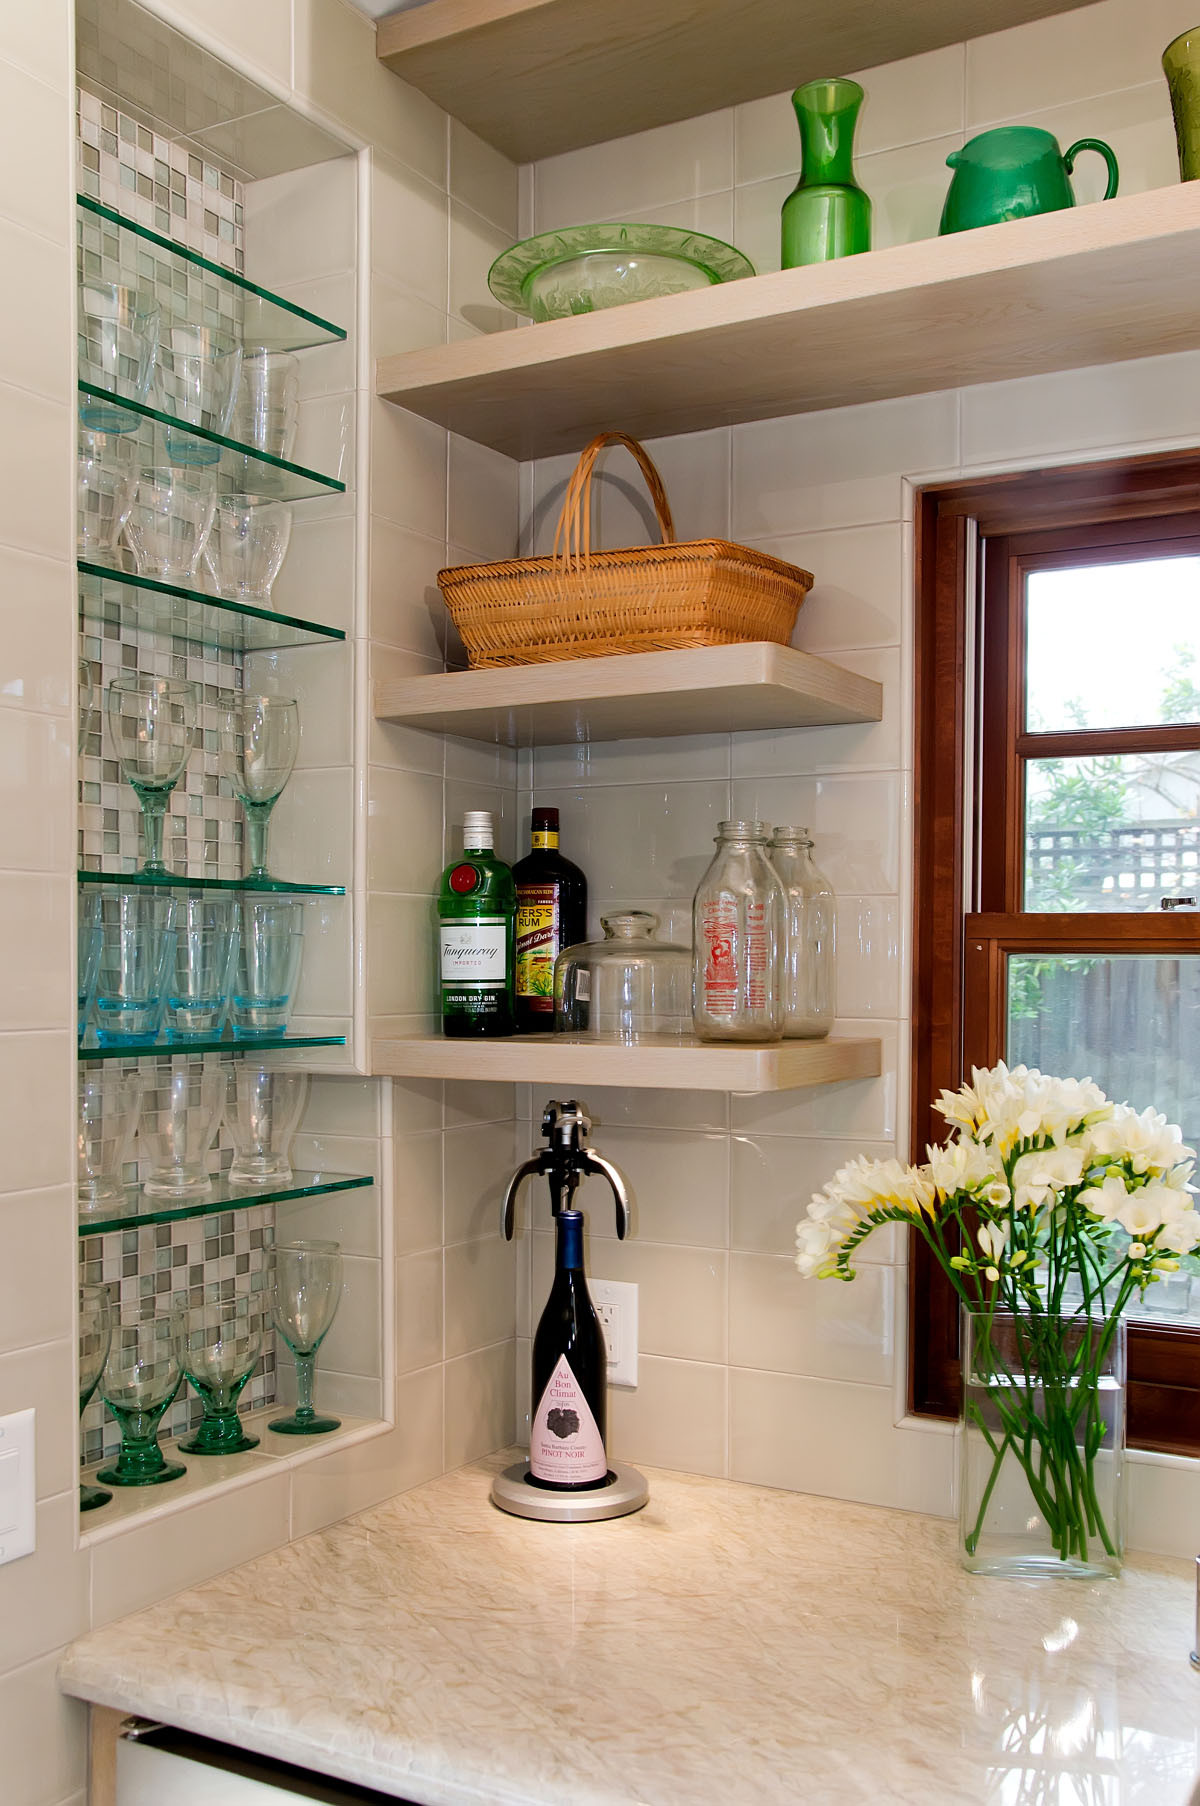 Glass Bar Shelves Design Ideas